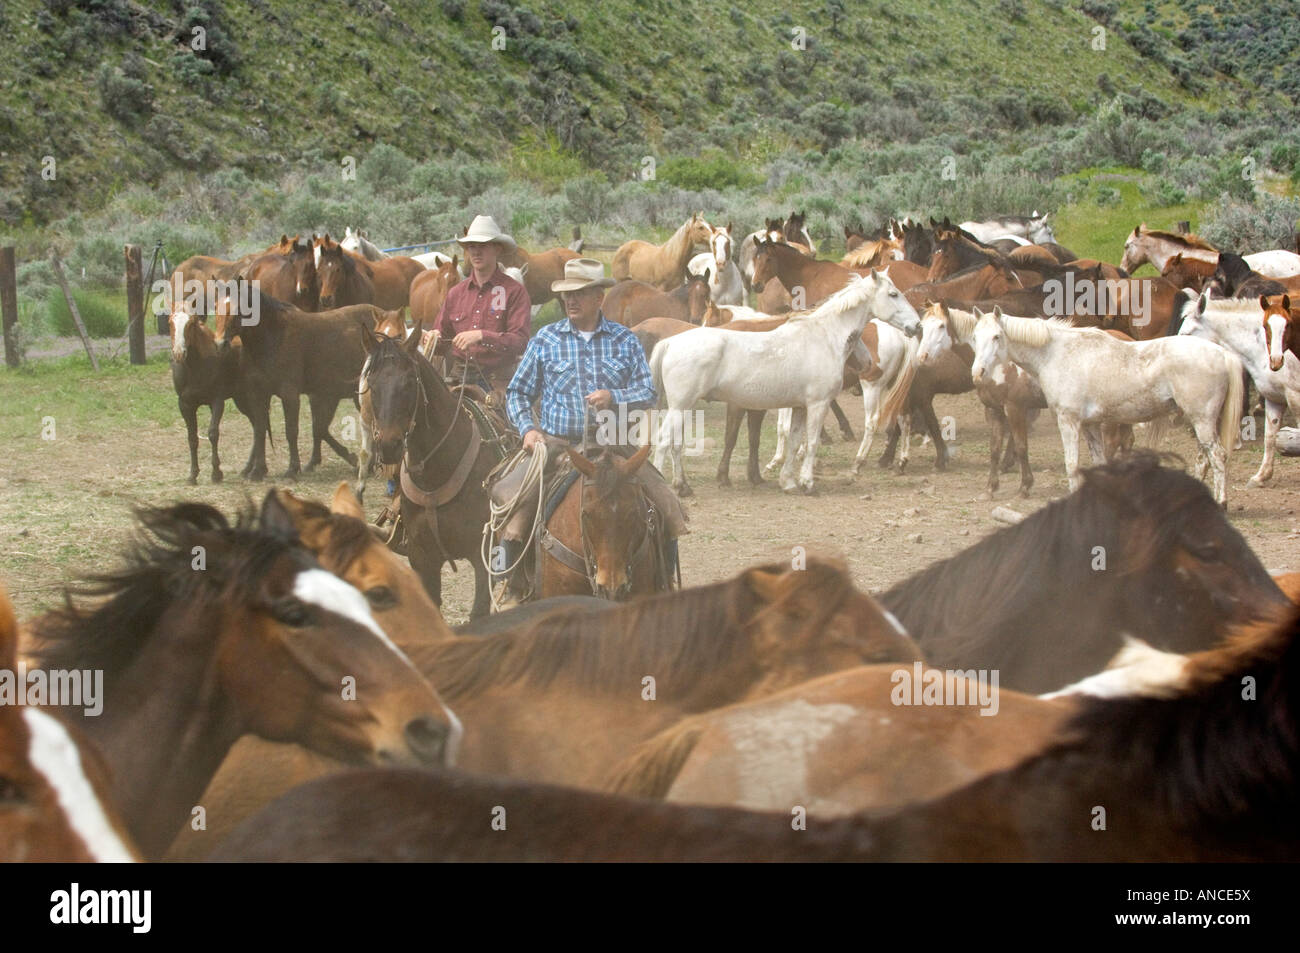 USA, Washington, Malaga, Young cowboy and foreman working corralled horses after roundup. Stock Photo